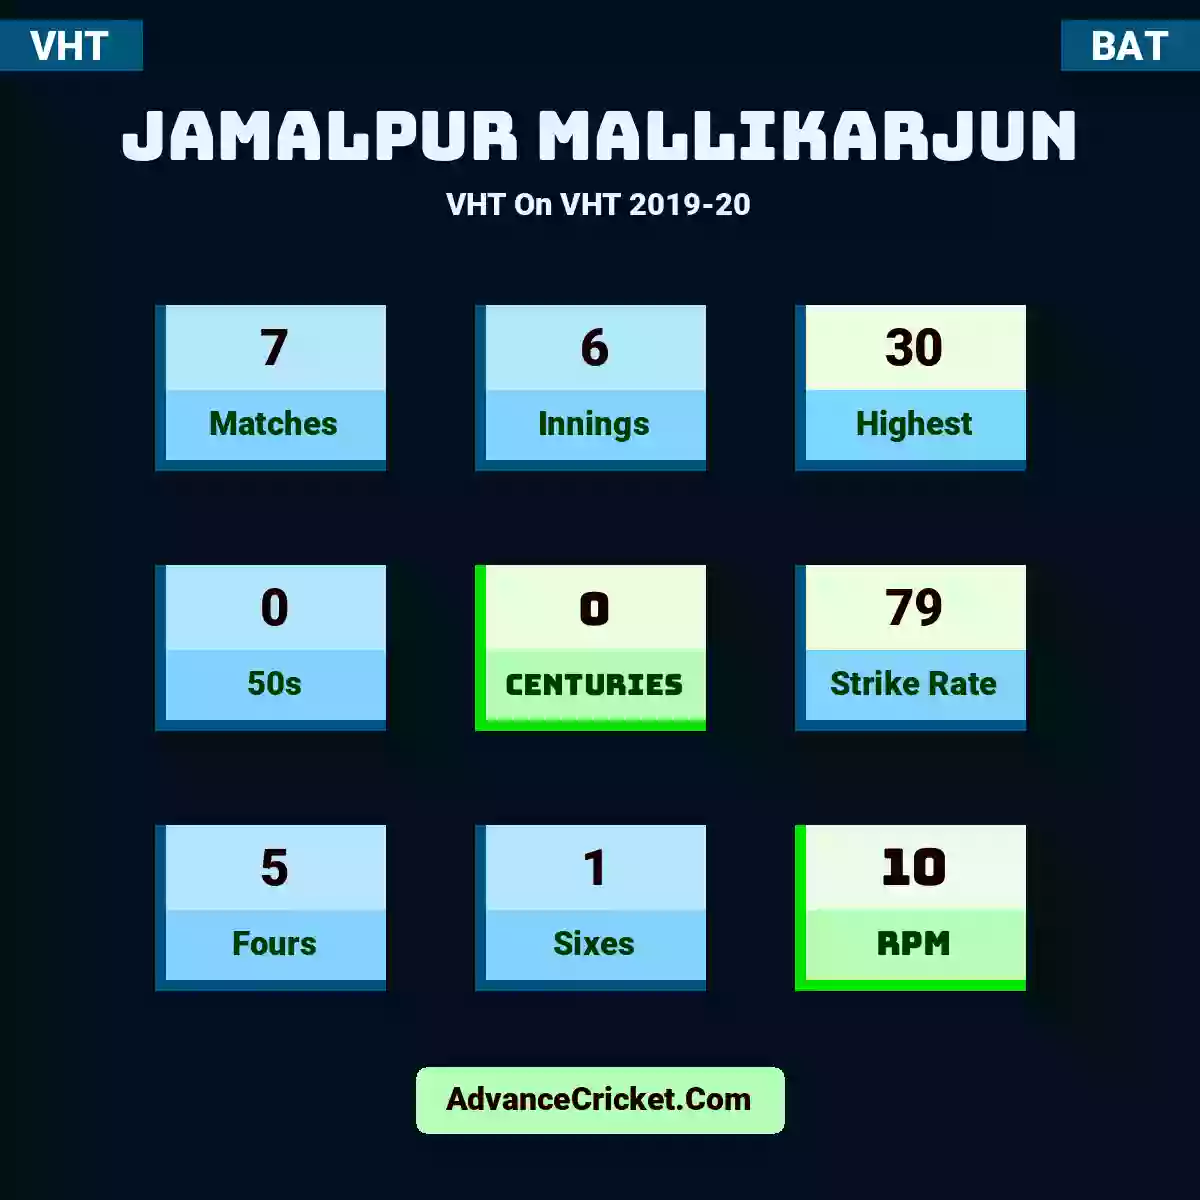 Jamalpur Mallikarjun VHT  On VHT 2019-20, Jamalpur Mallikarjun played 7 matches, scored 30 runs as highest, 0 half-centuries, and 0 centuries, with a strike rate of 79. J.Mallikarjun hit 5 fours and 1 sixes, with an RPM of 10.